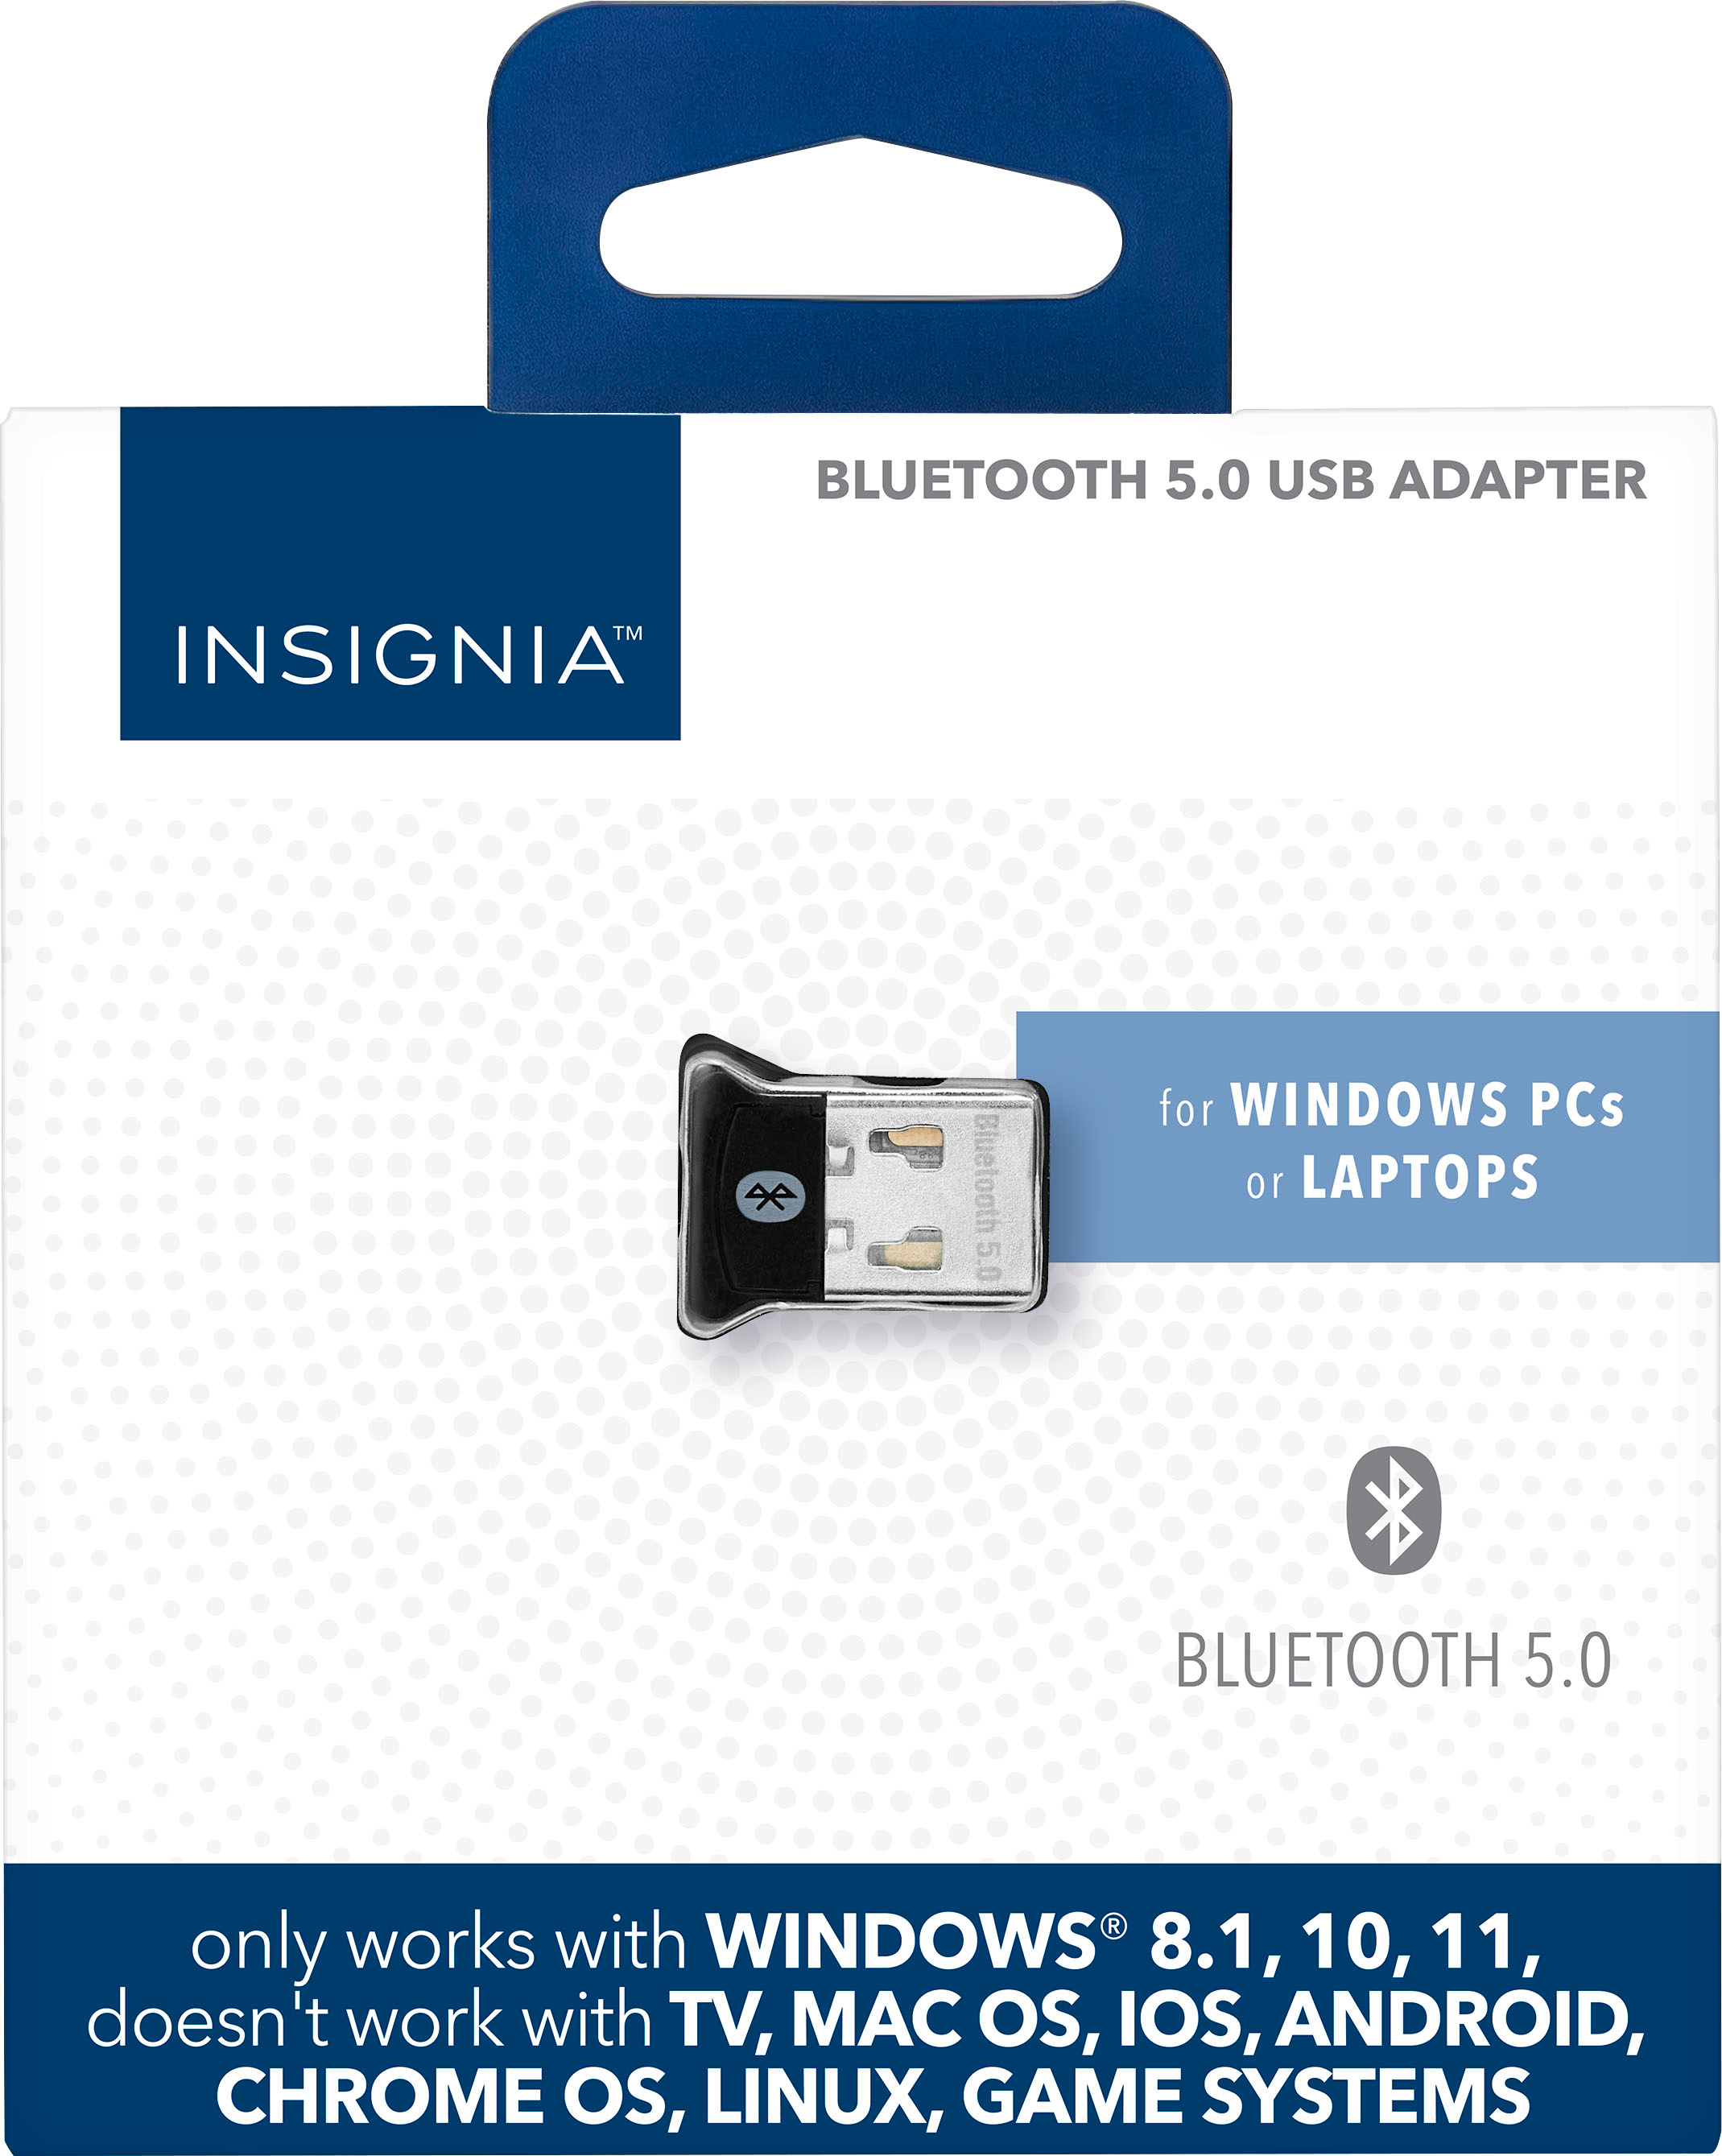 Insignia Bluetooth 5.0 USB Adapter - Black - 1 Each